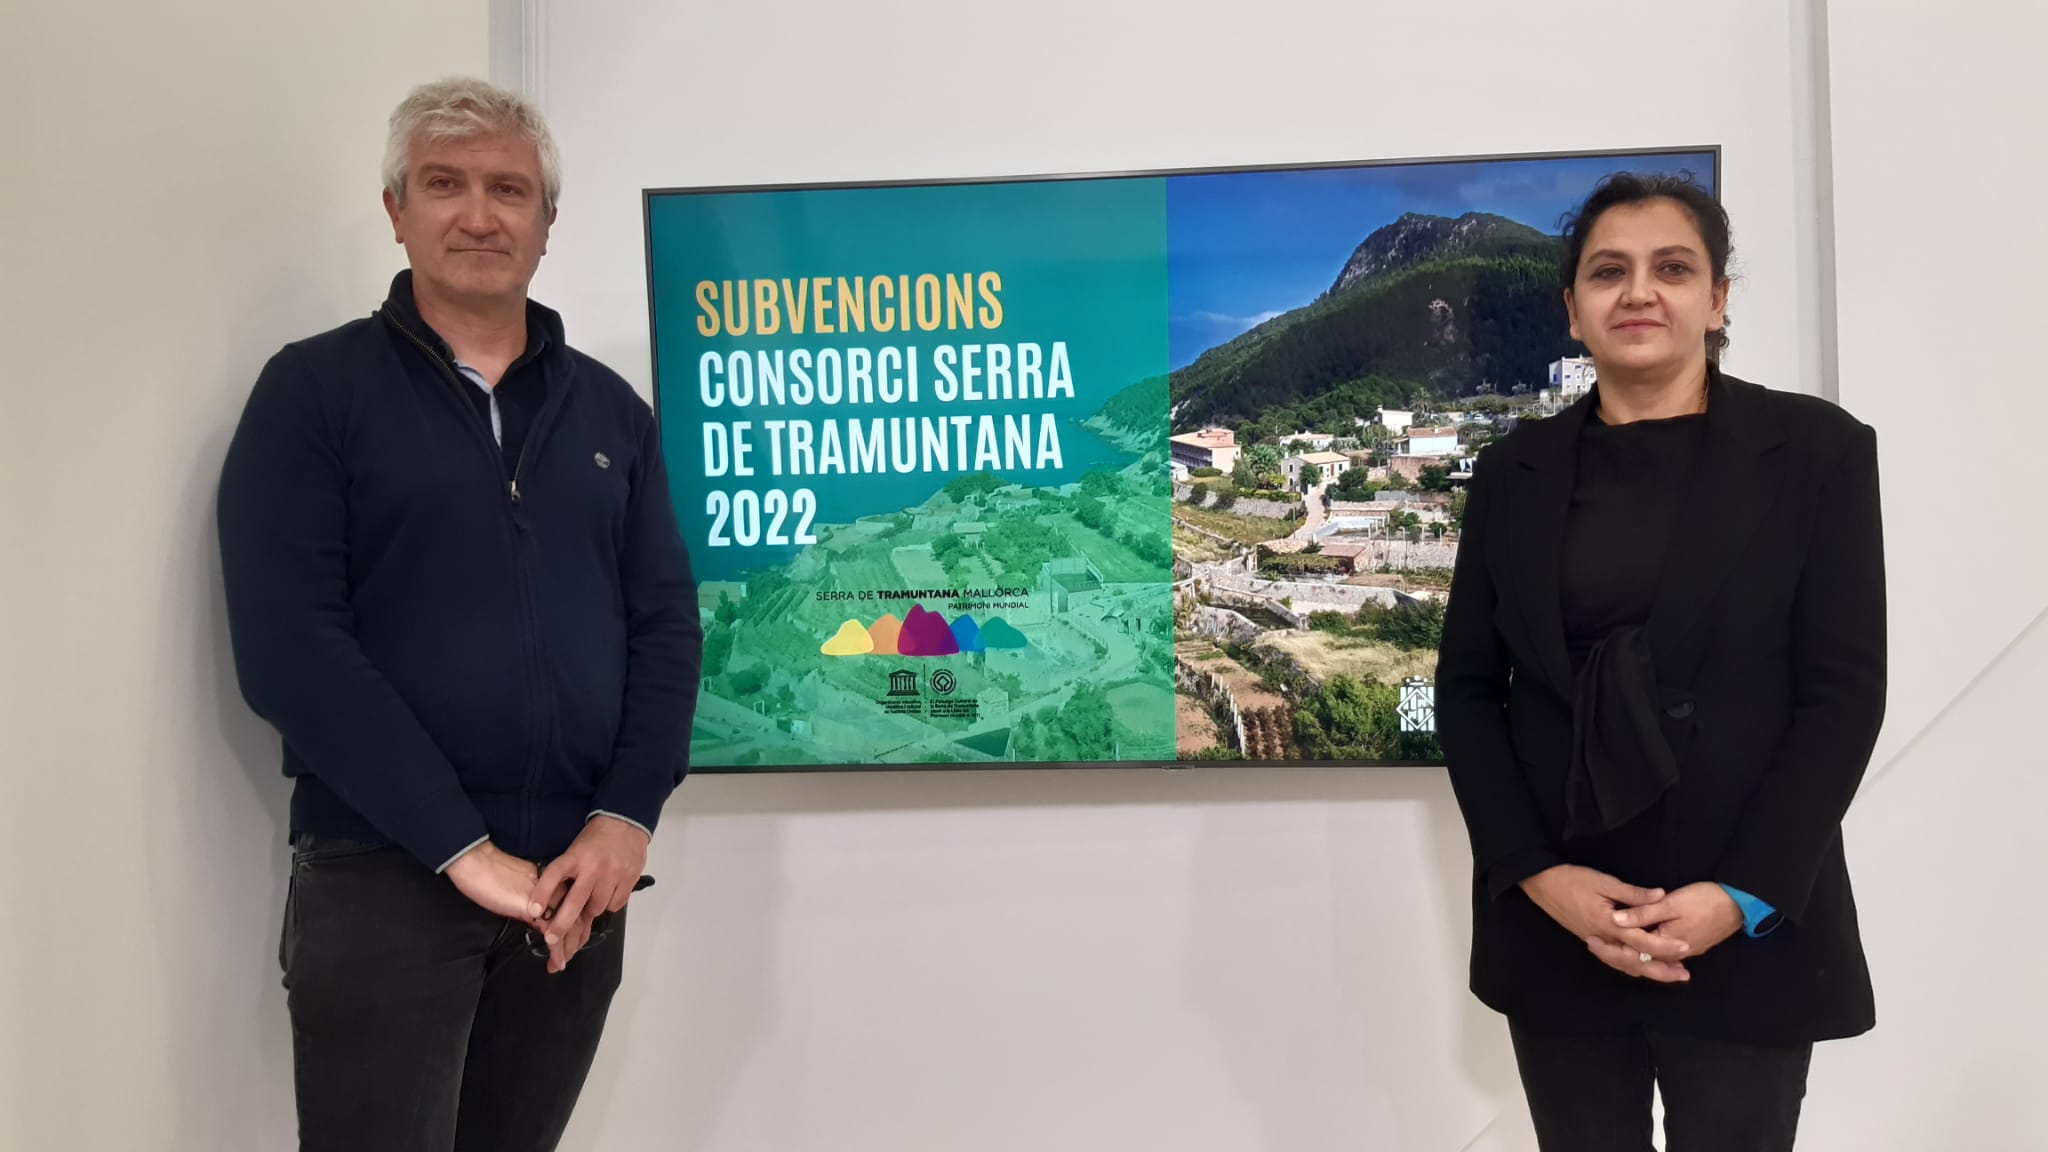 Presentación de la convocatoria de subvenciones 2022 del Consorci Serra de Tramuntana.